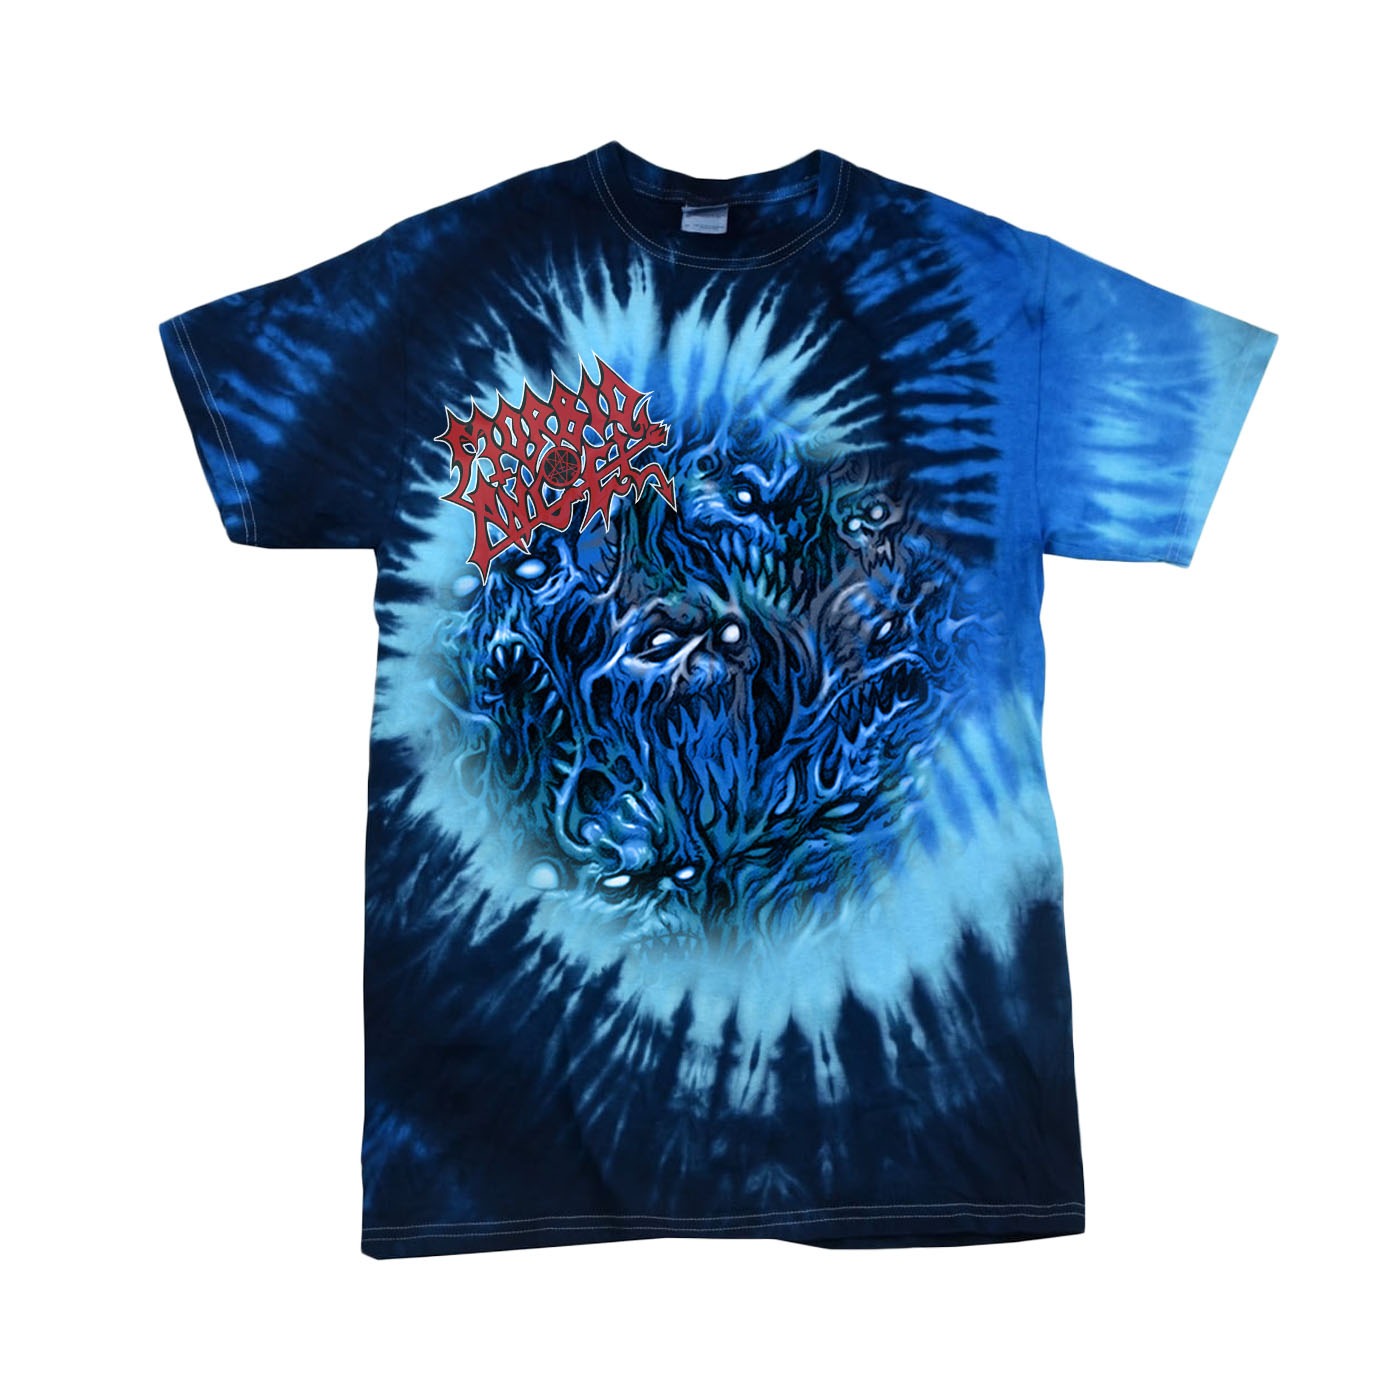 Morbid Angel "Altars Of Madness" Blue Tie Dye T shirt